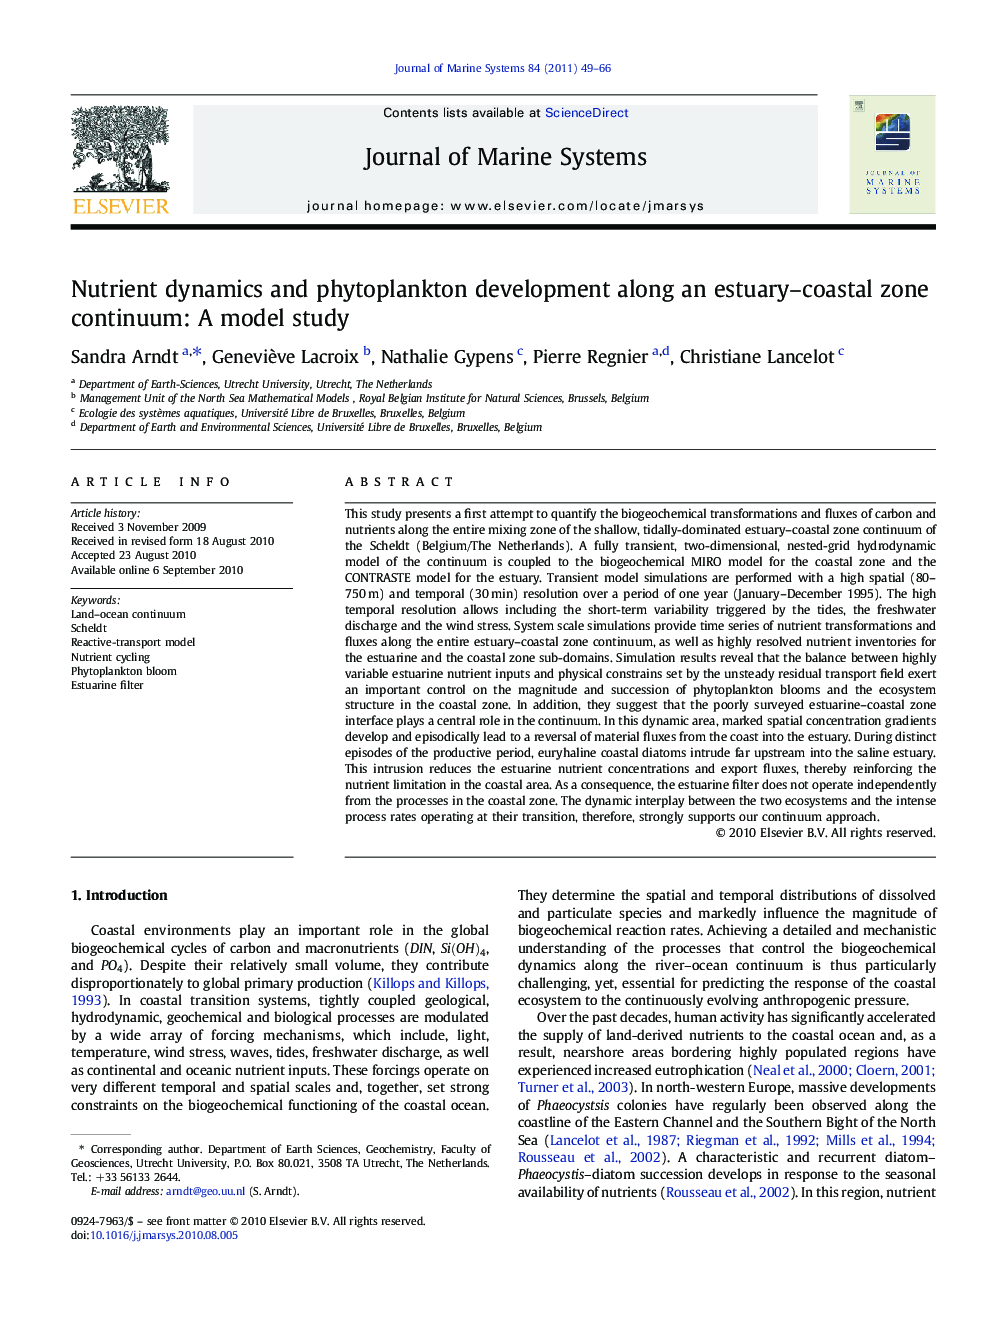 Nutrient dynamics and phytoplankton development along an estuary–coastal zone continuum: A model study